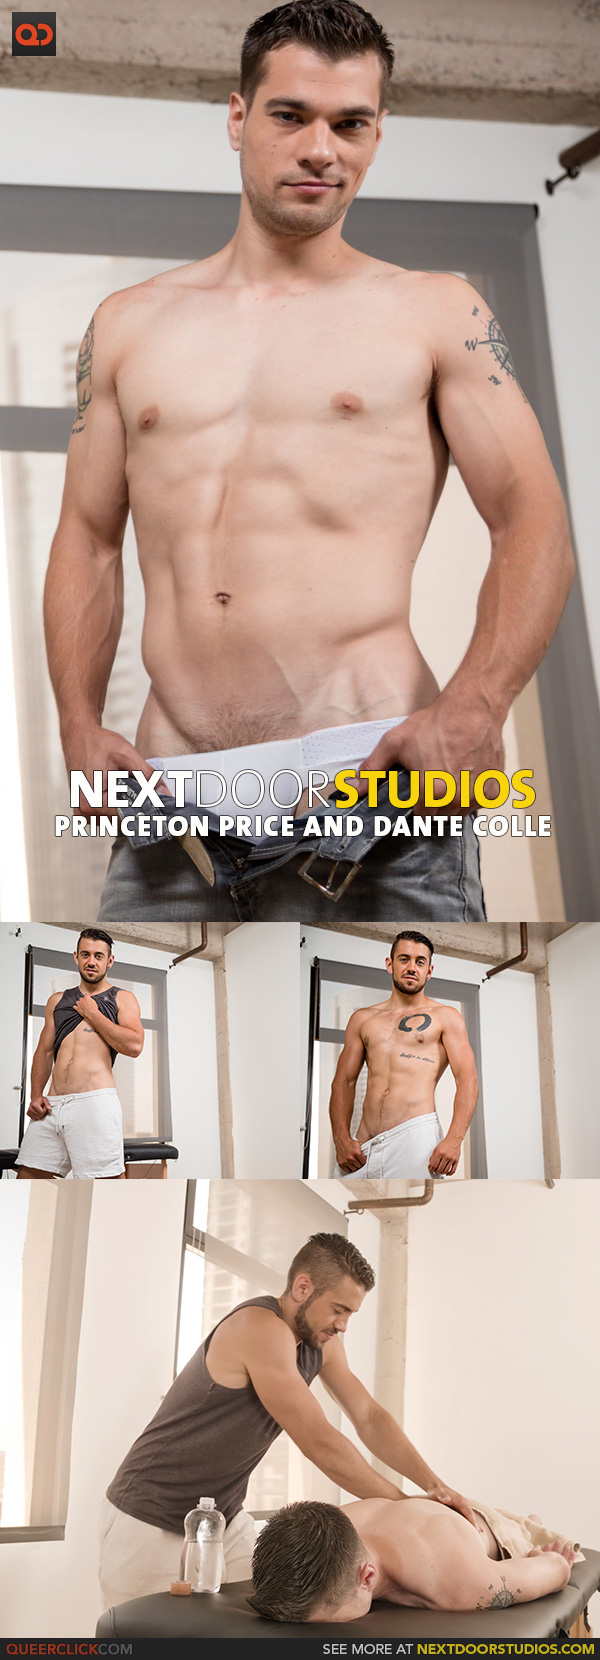 Next Door Studios:  Princeton Price and Dante Colle